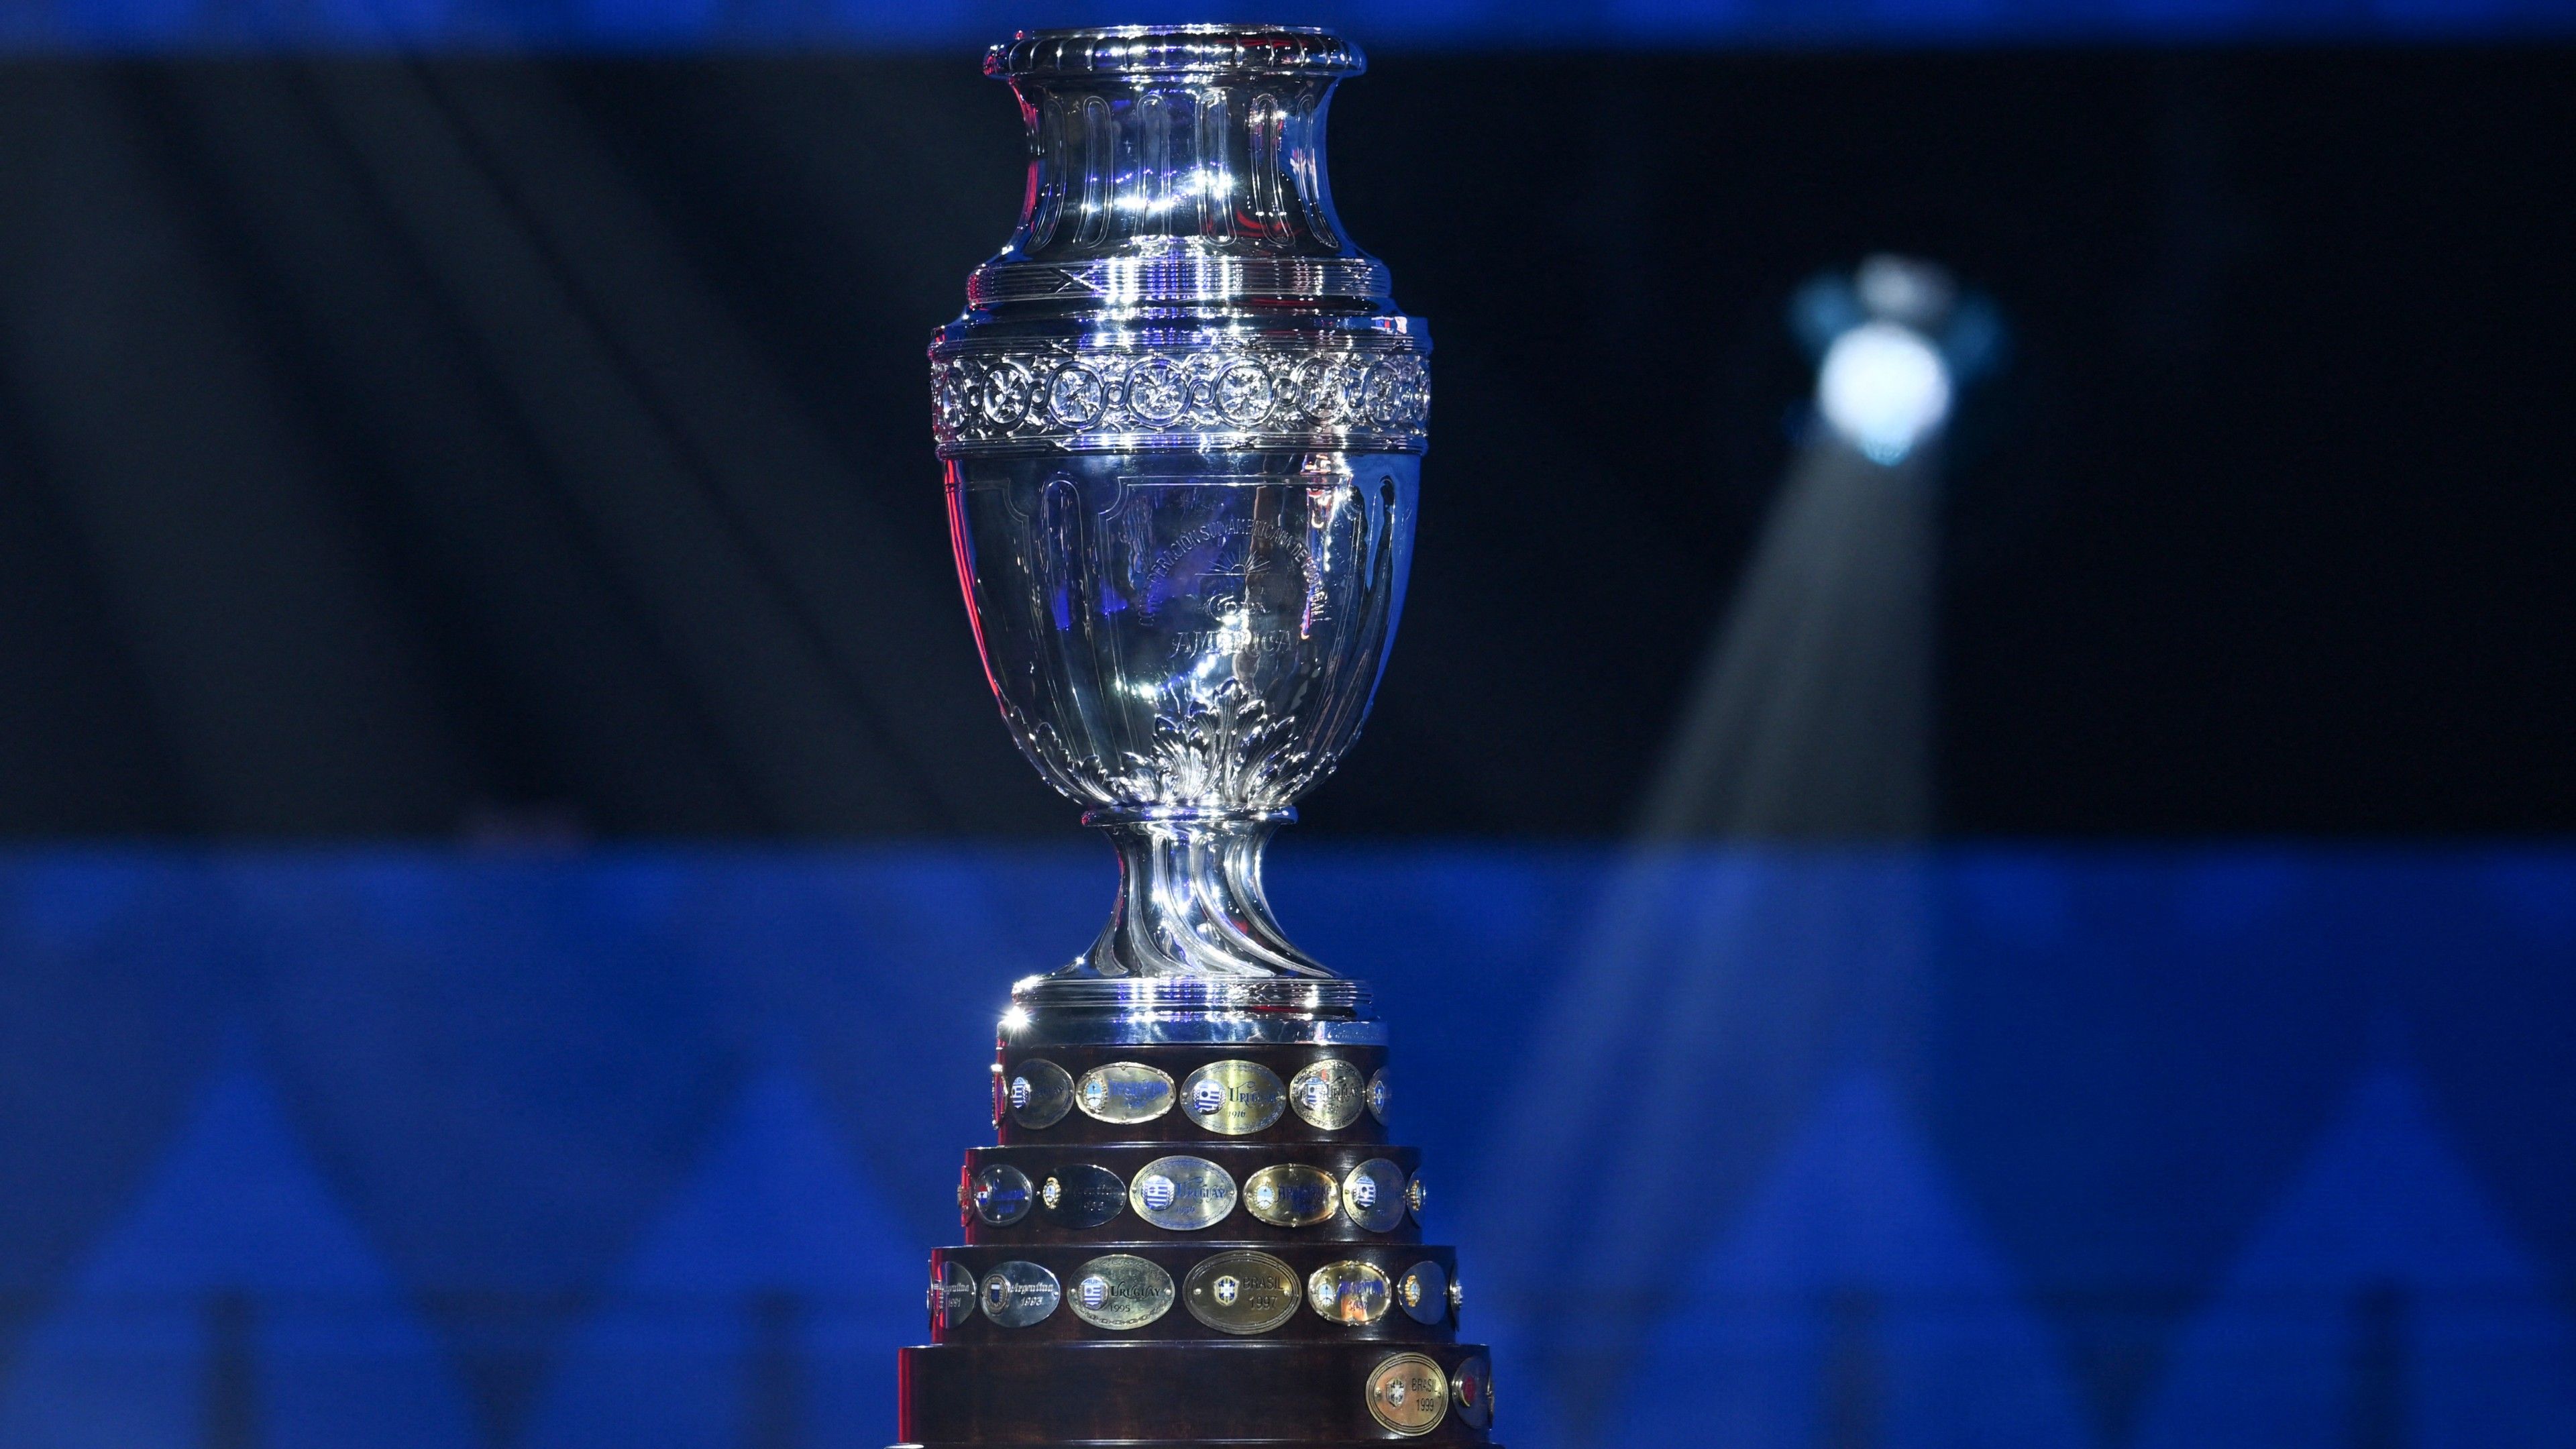 Copa America 2024 trophy